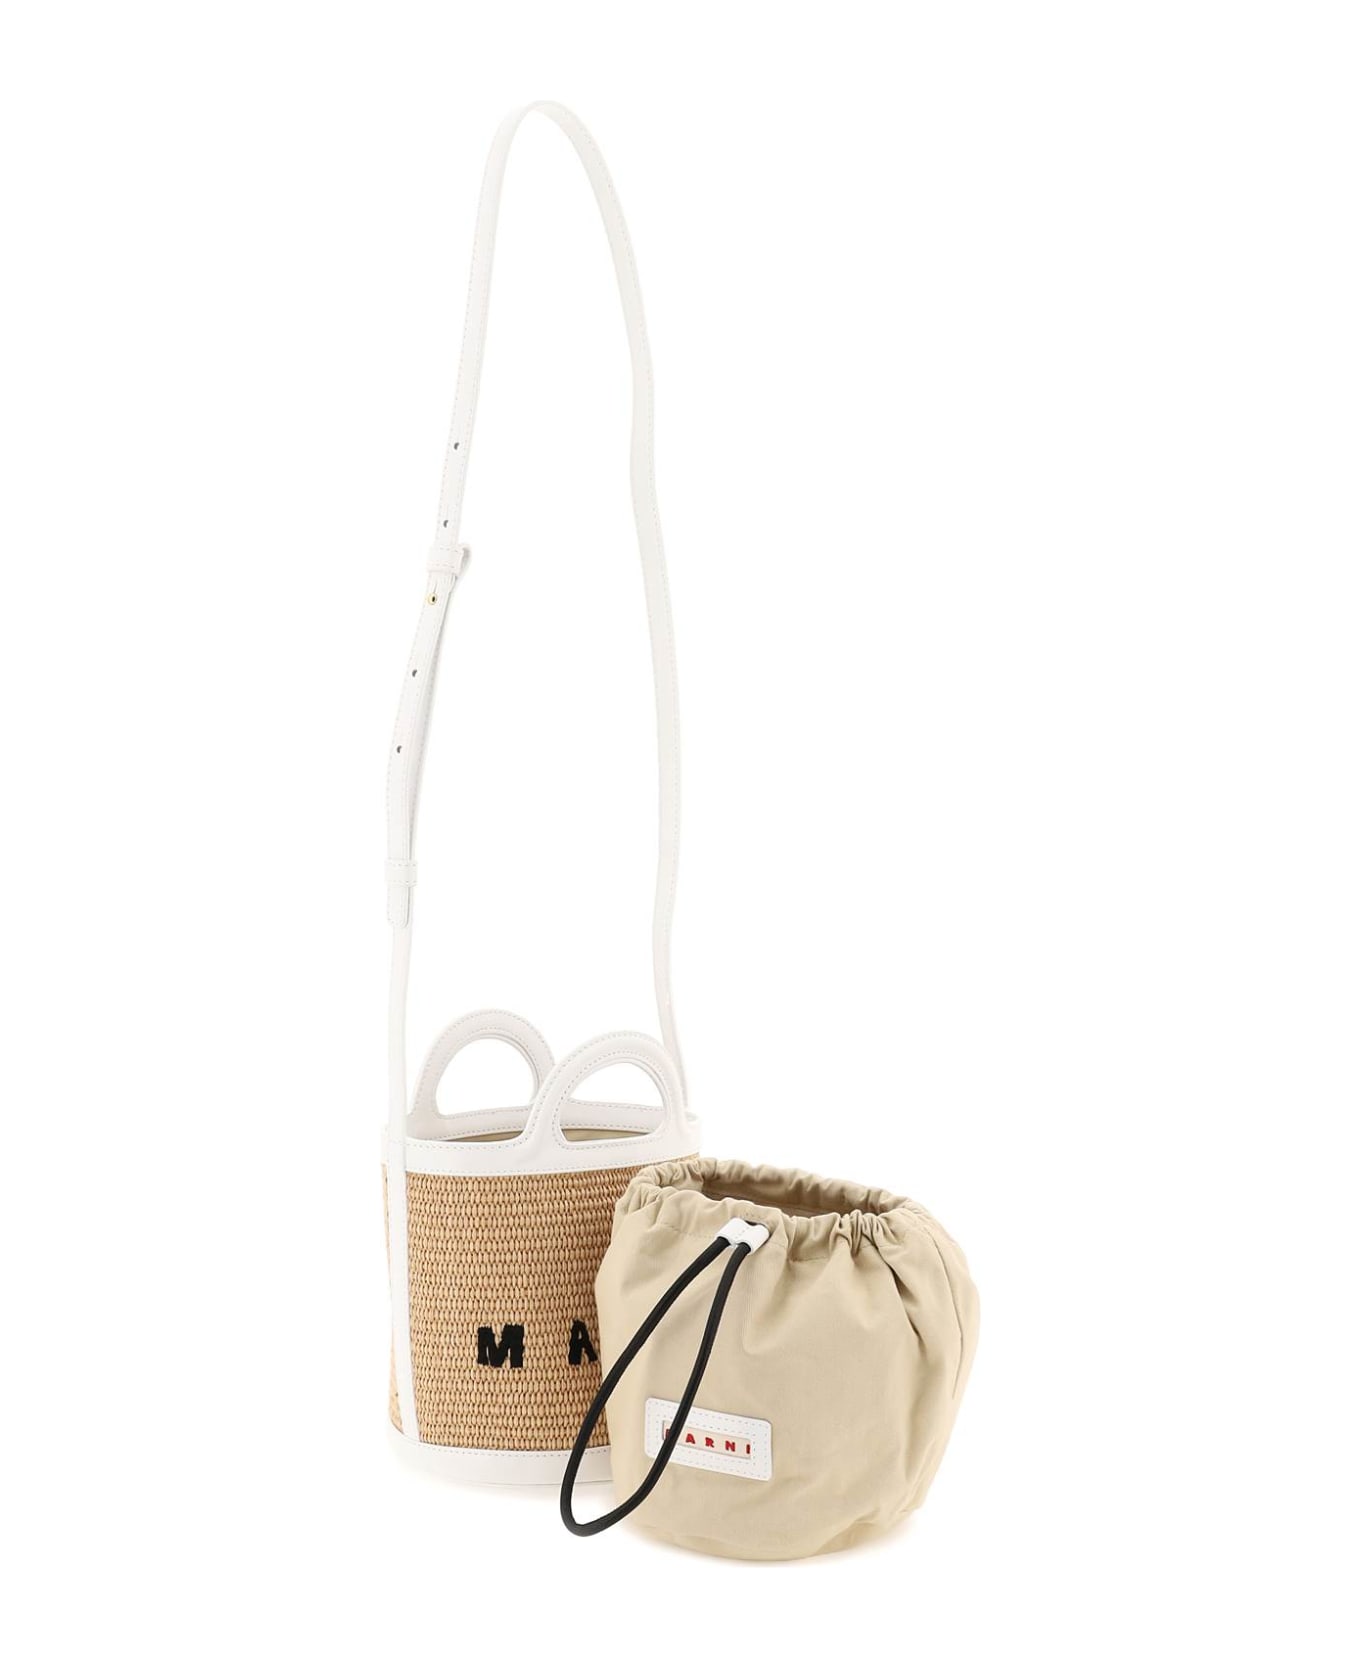 Marni Tropicalia Mini Bag In White Leather And Natural Raffia - White/natural